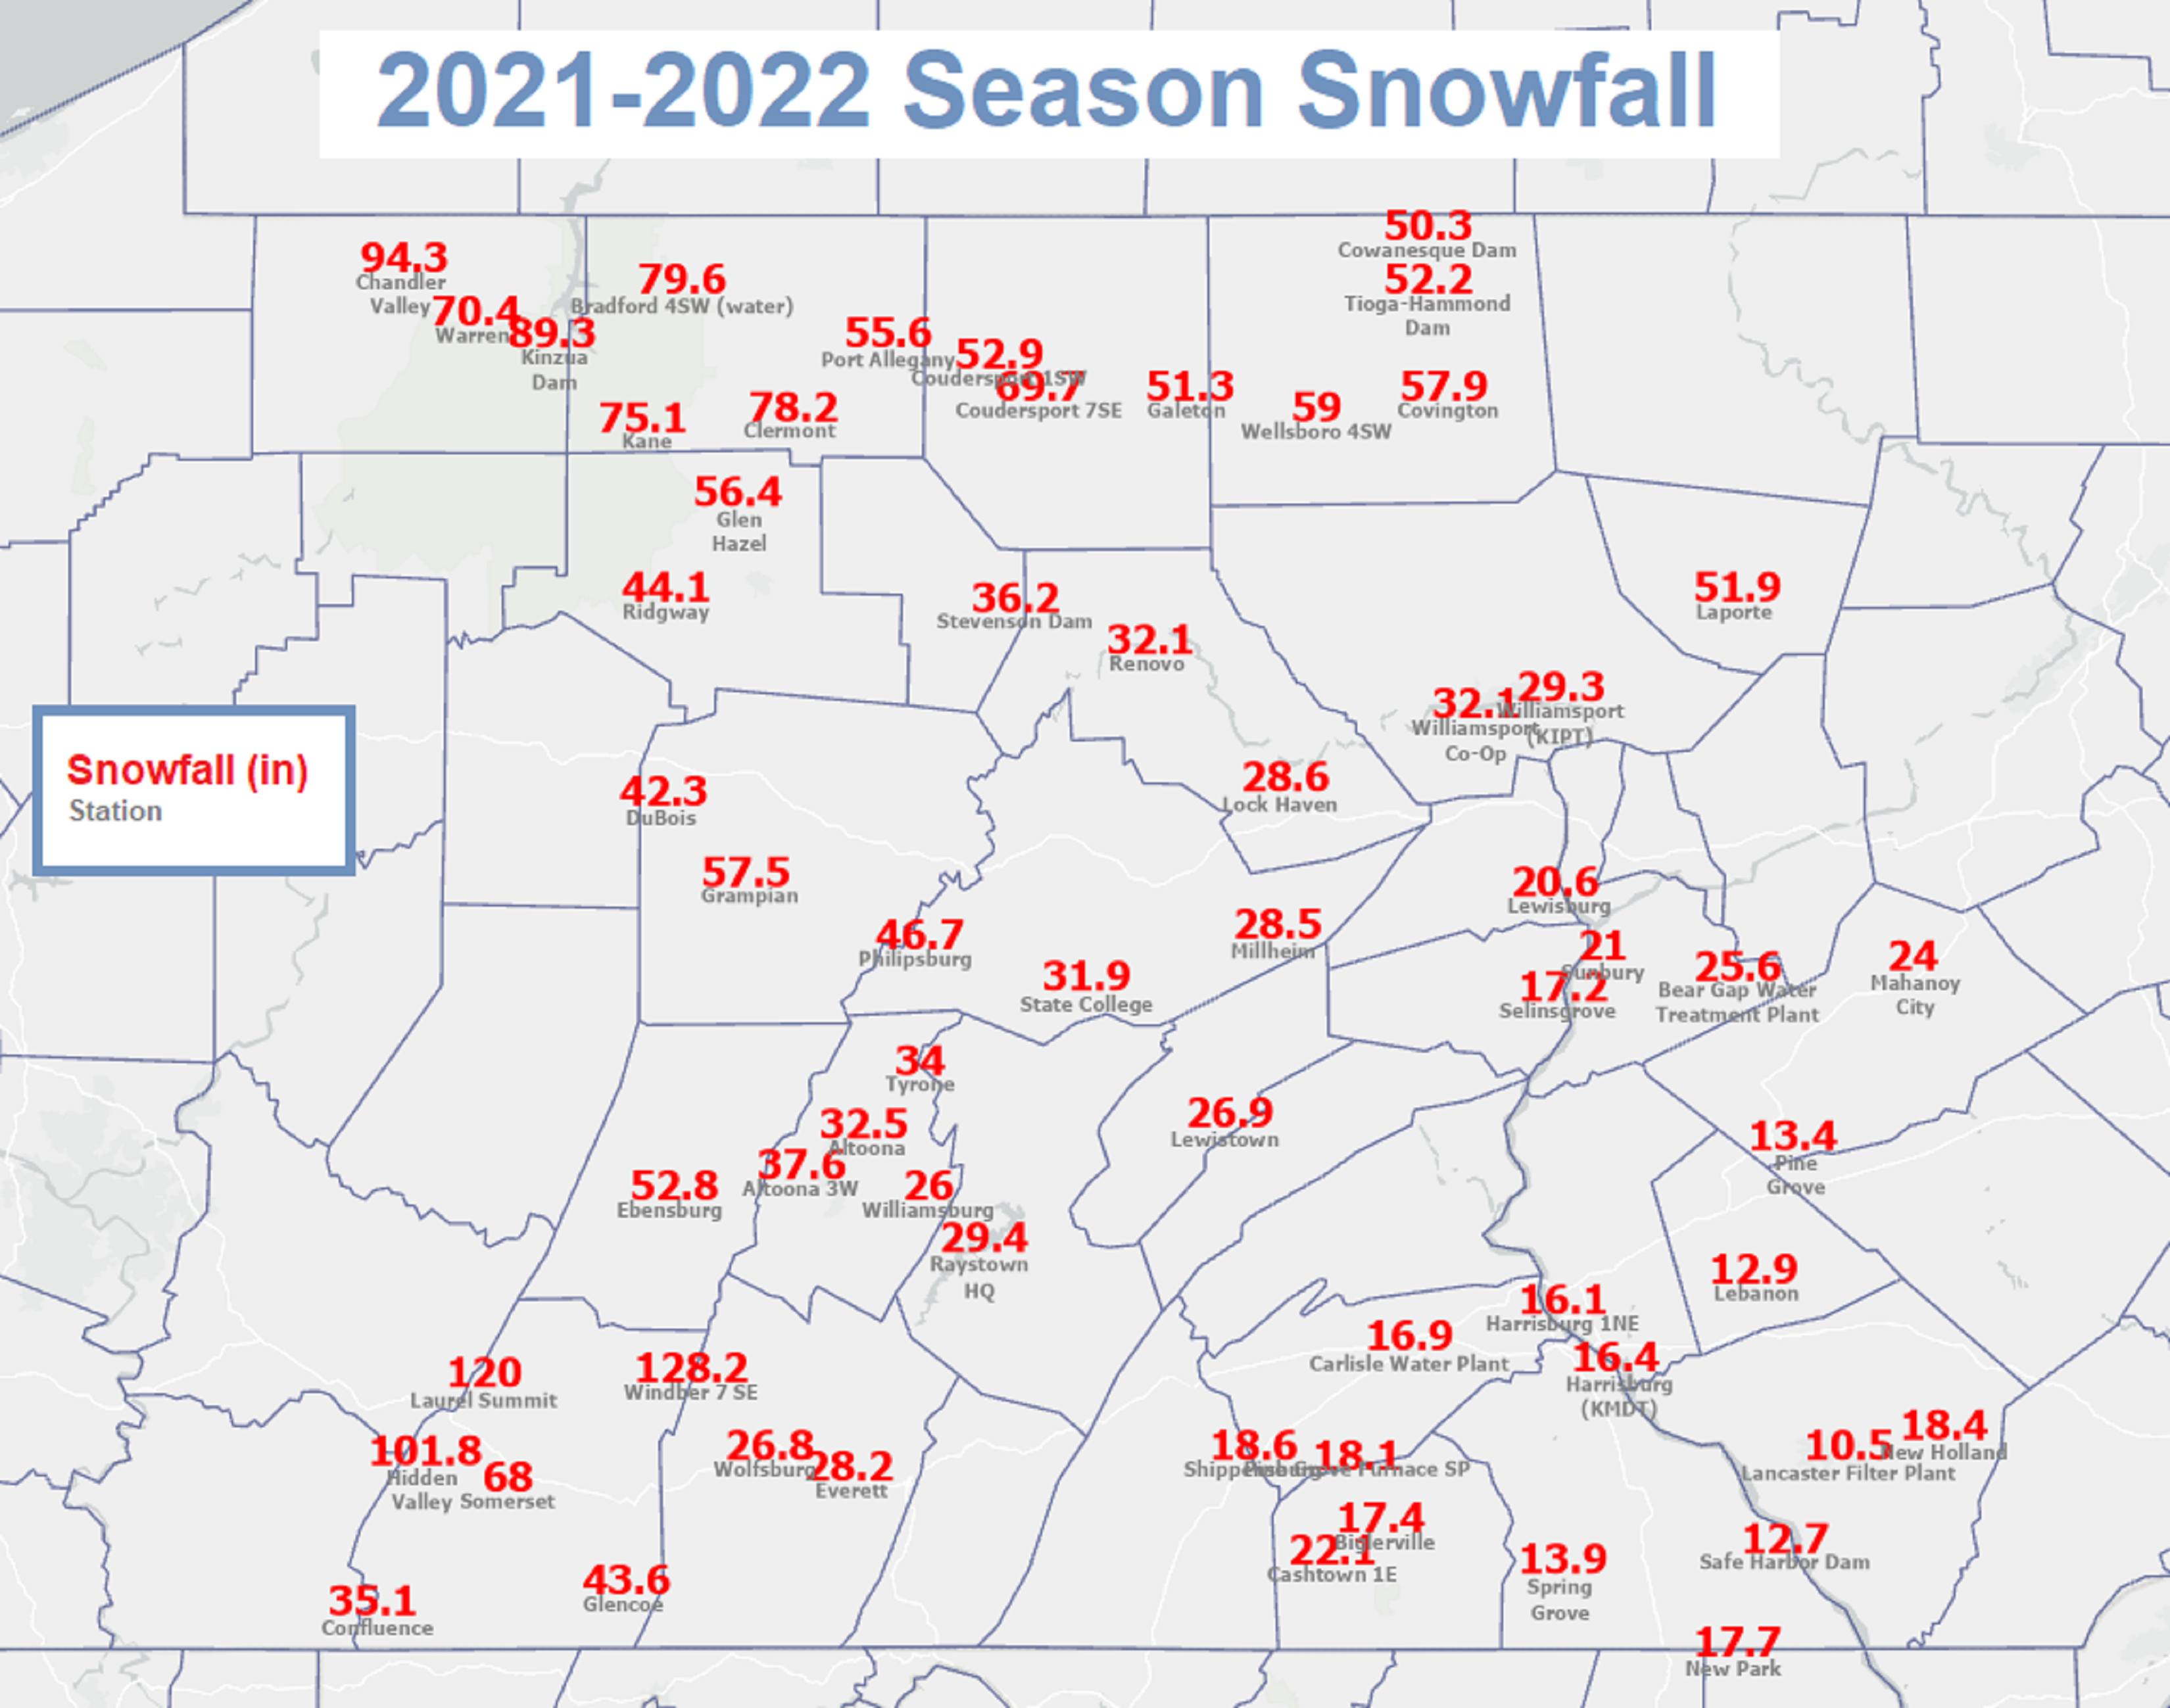 Snowfall Map of 2021-2022 Season